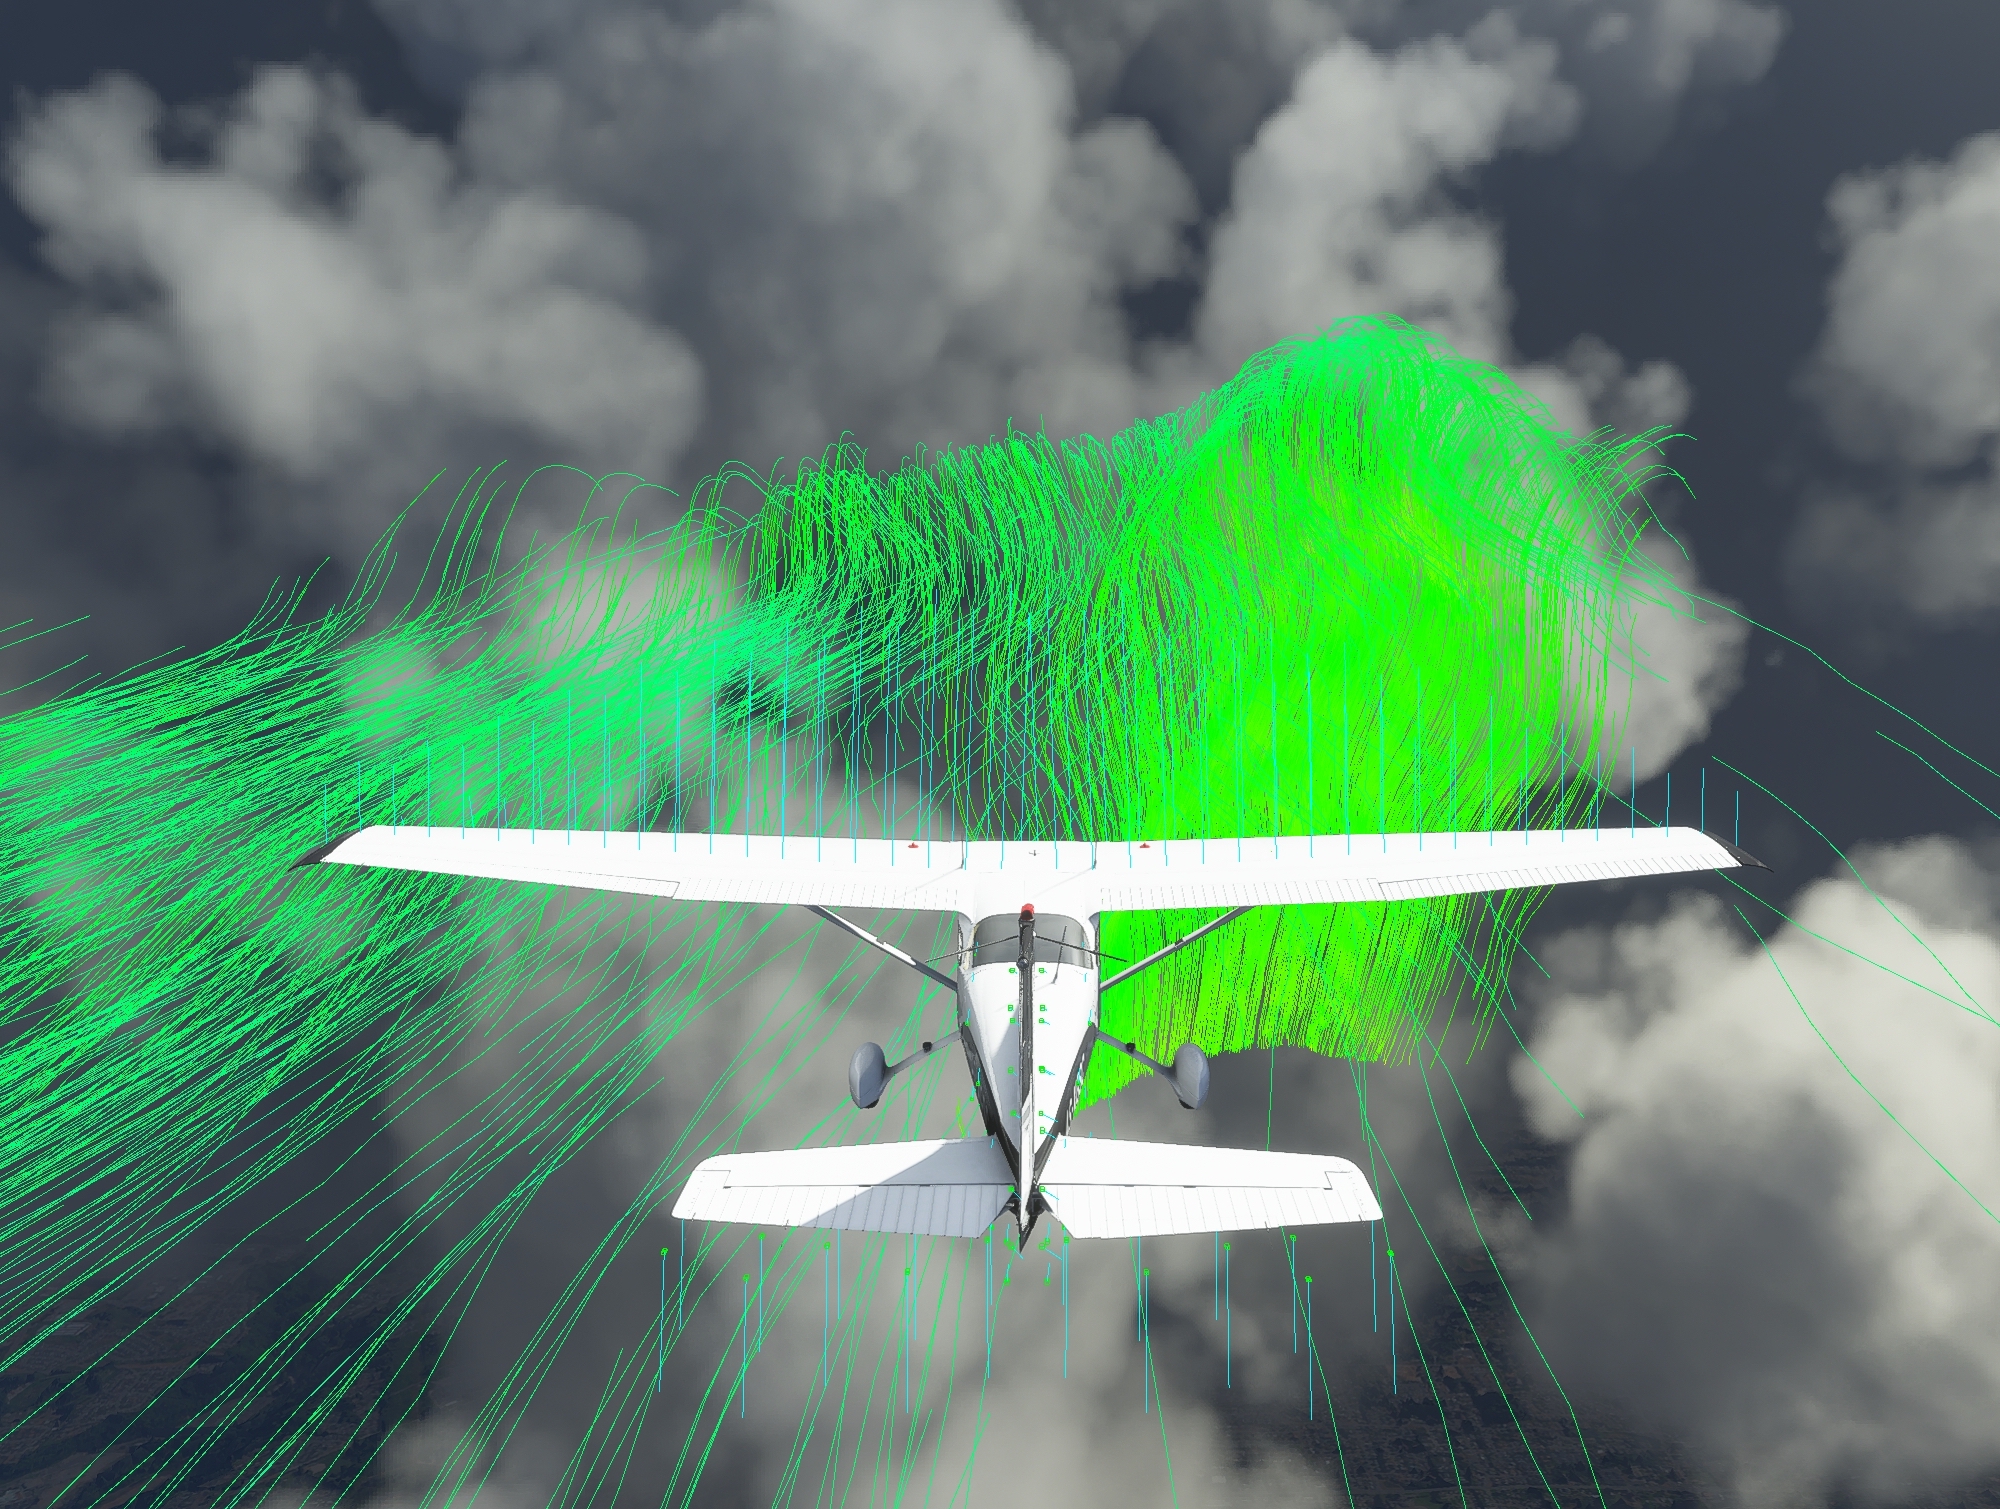 Can Planes make a Barrel Roll x10? – Microsoft Flight Simulator